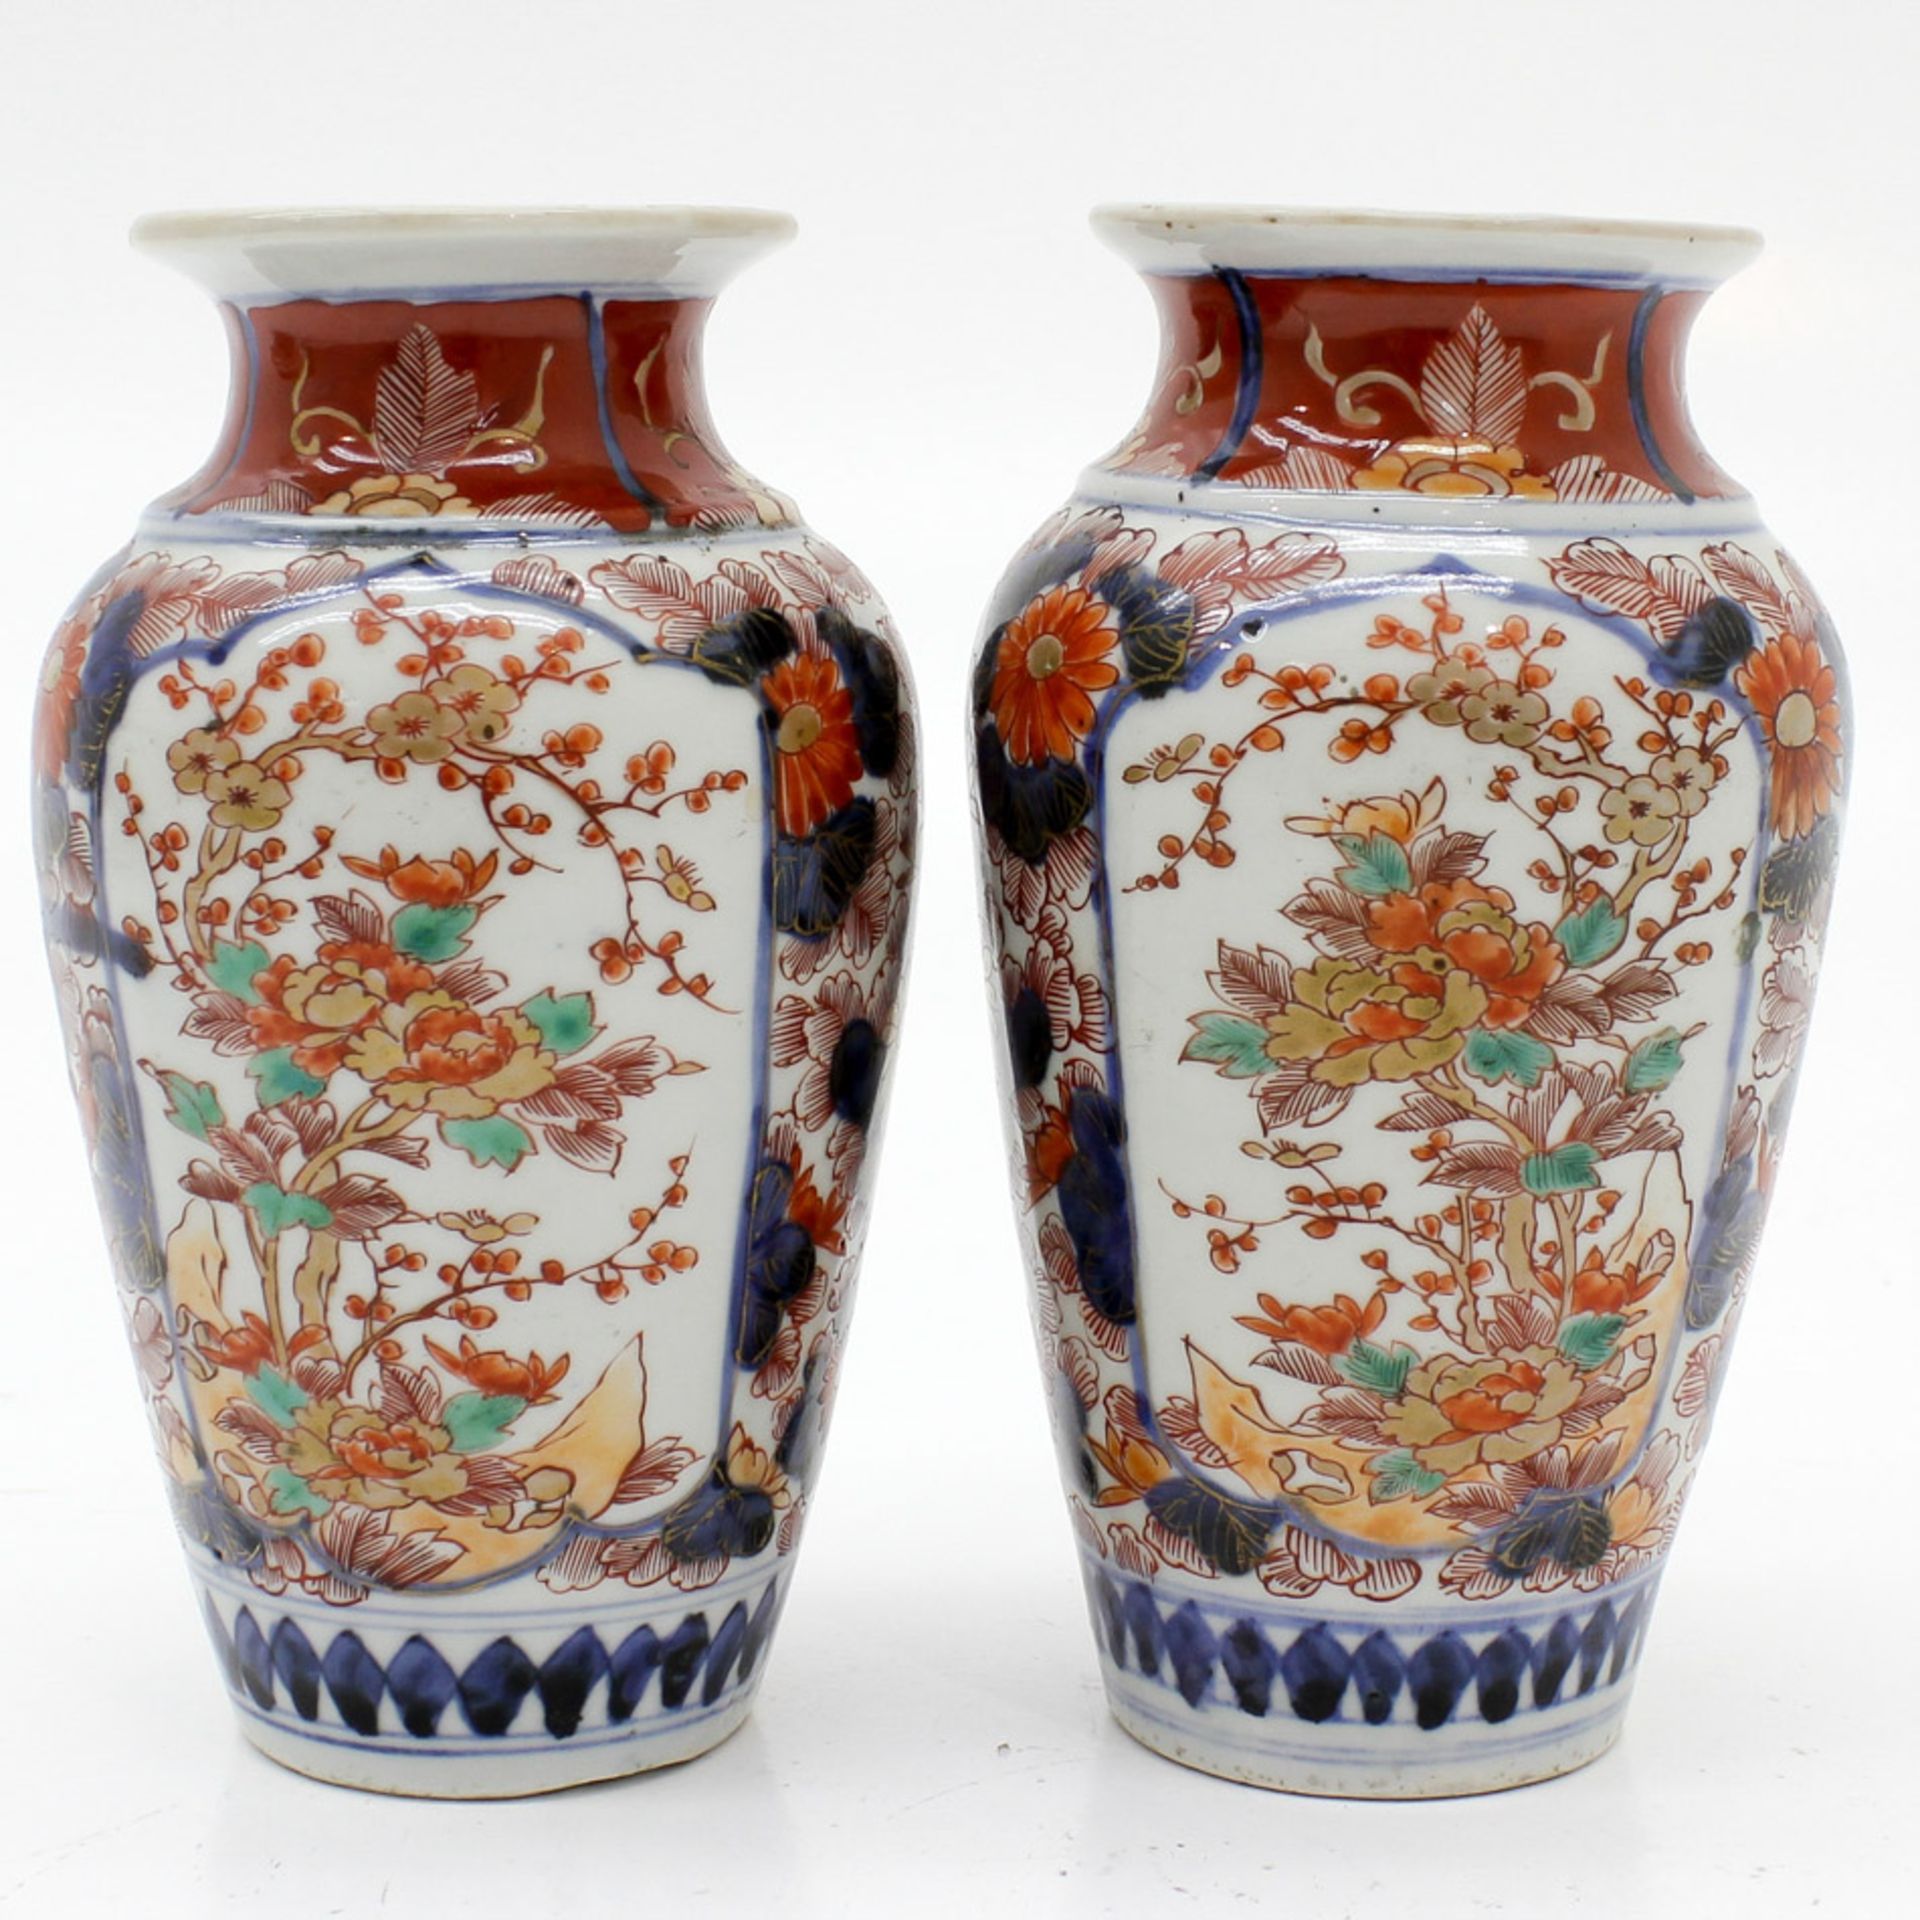 Lot of 2 Imari Vases In traditional decor and floral palette, 19 x 11 x 11 cm. - Bild 3 aus 6